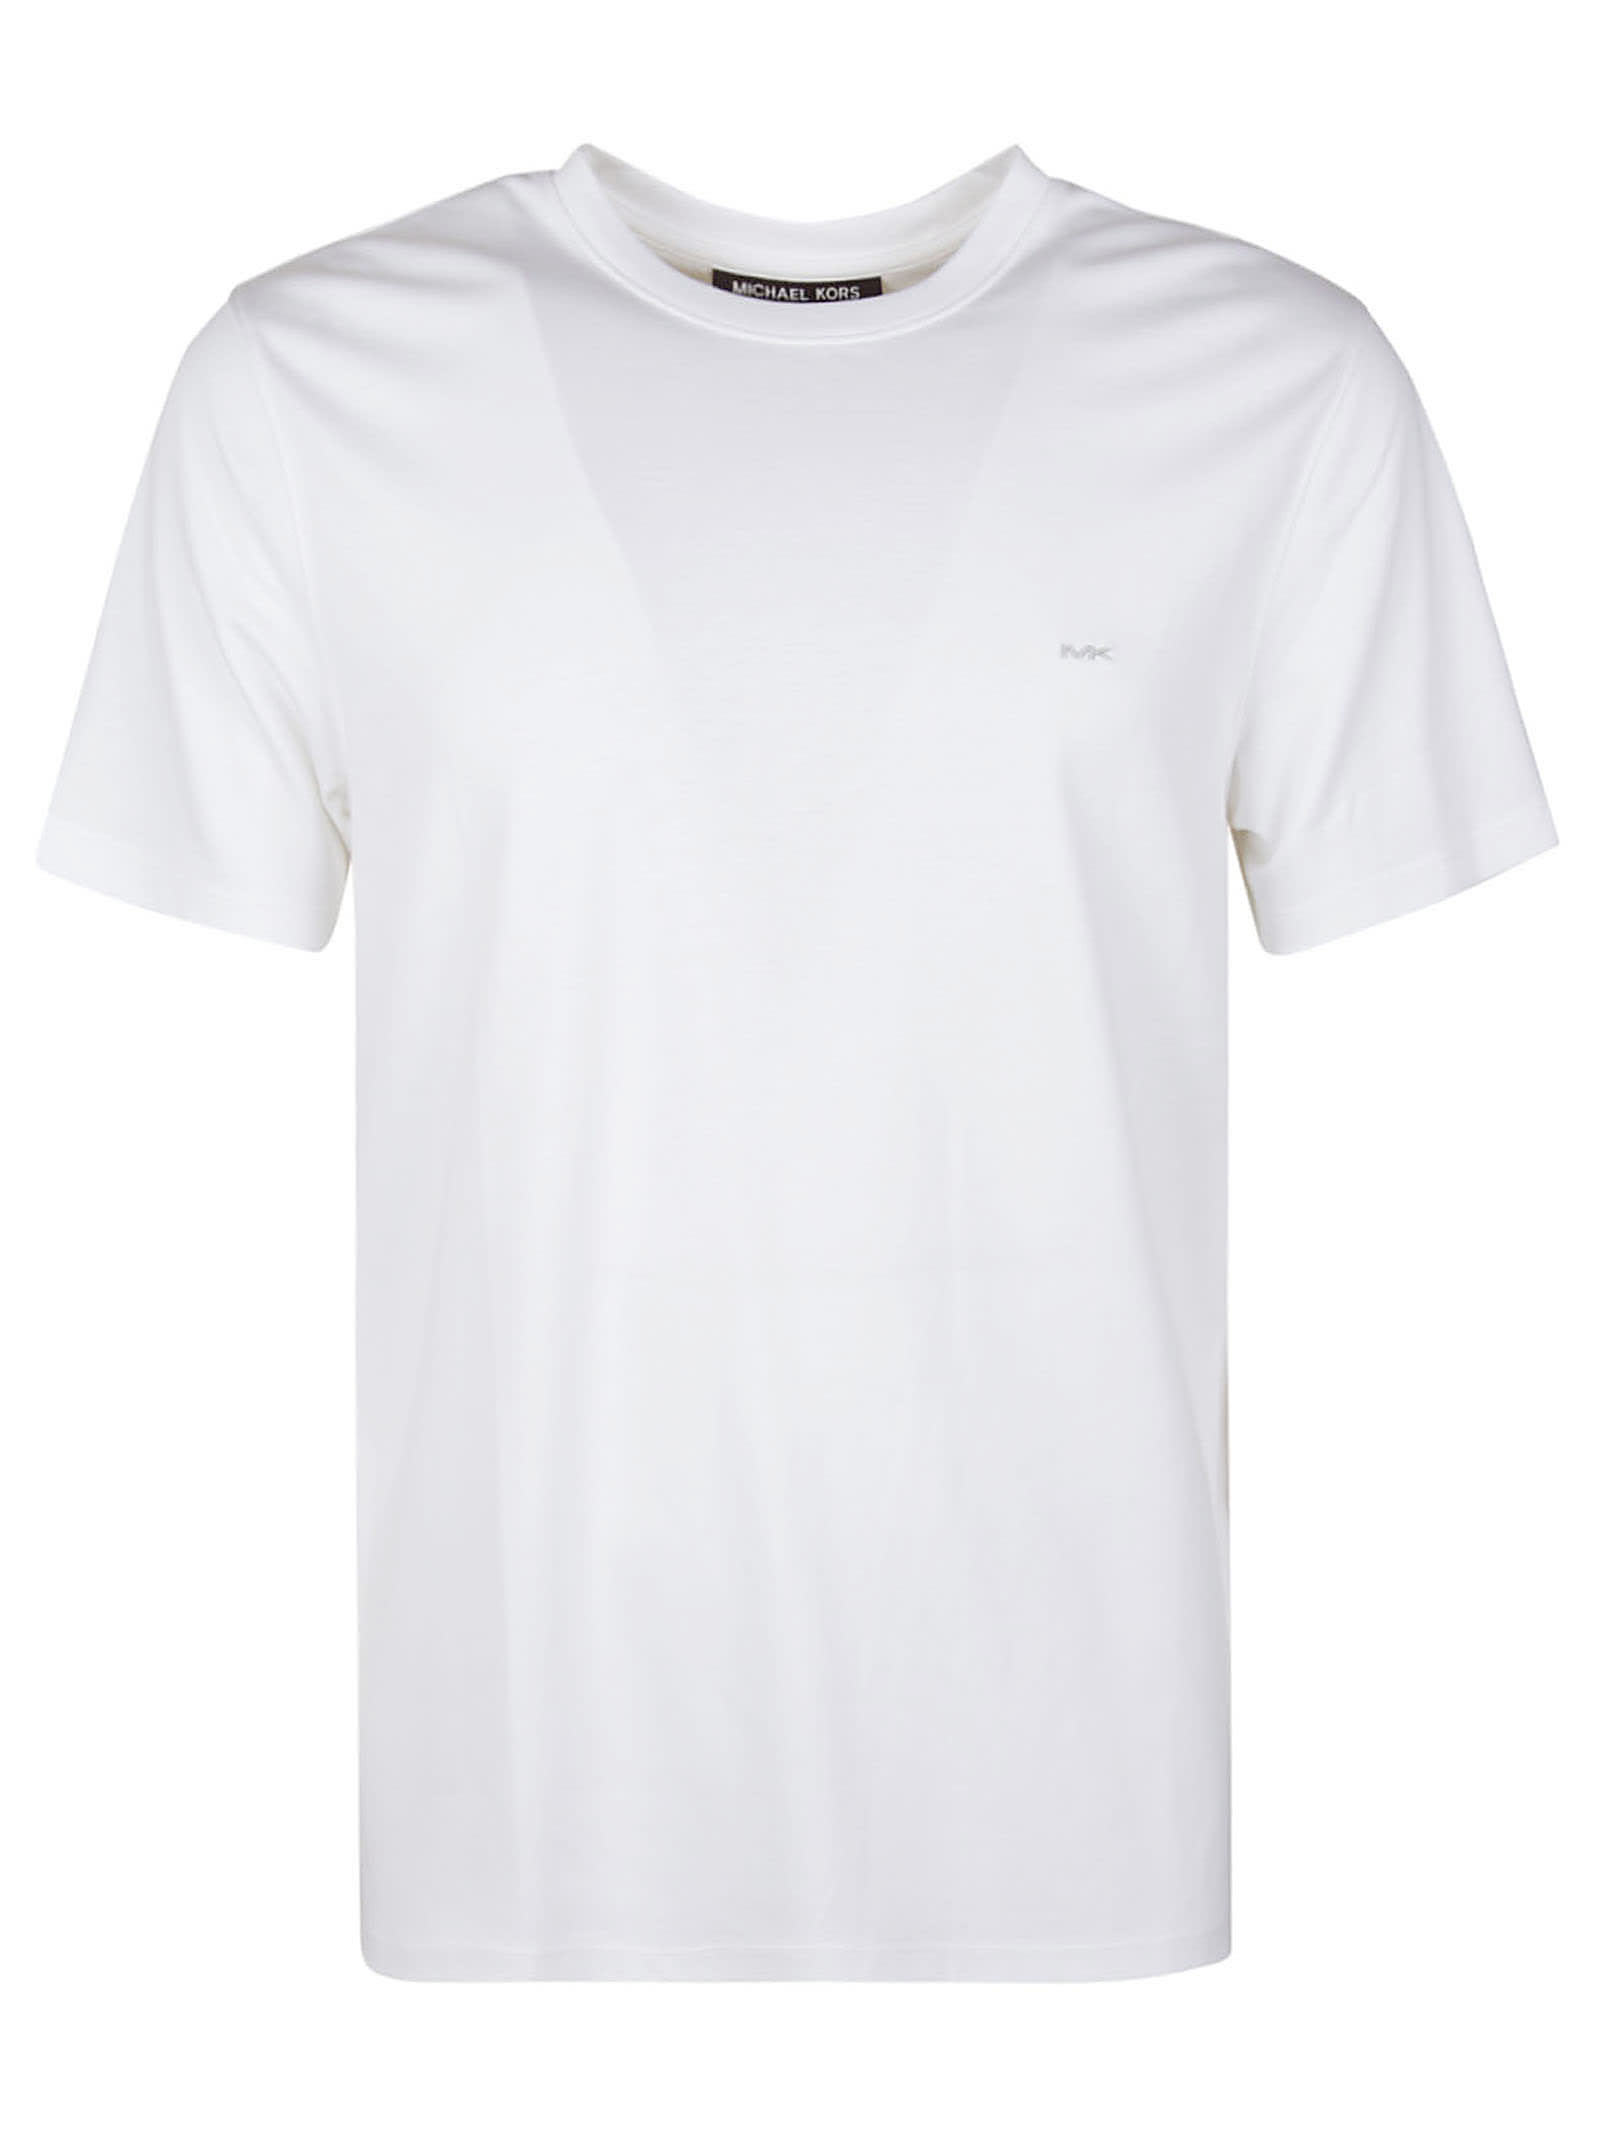 Michael Kors Round Neck T-shirt